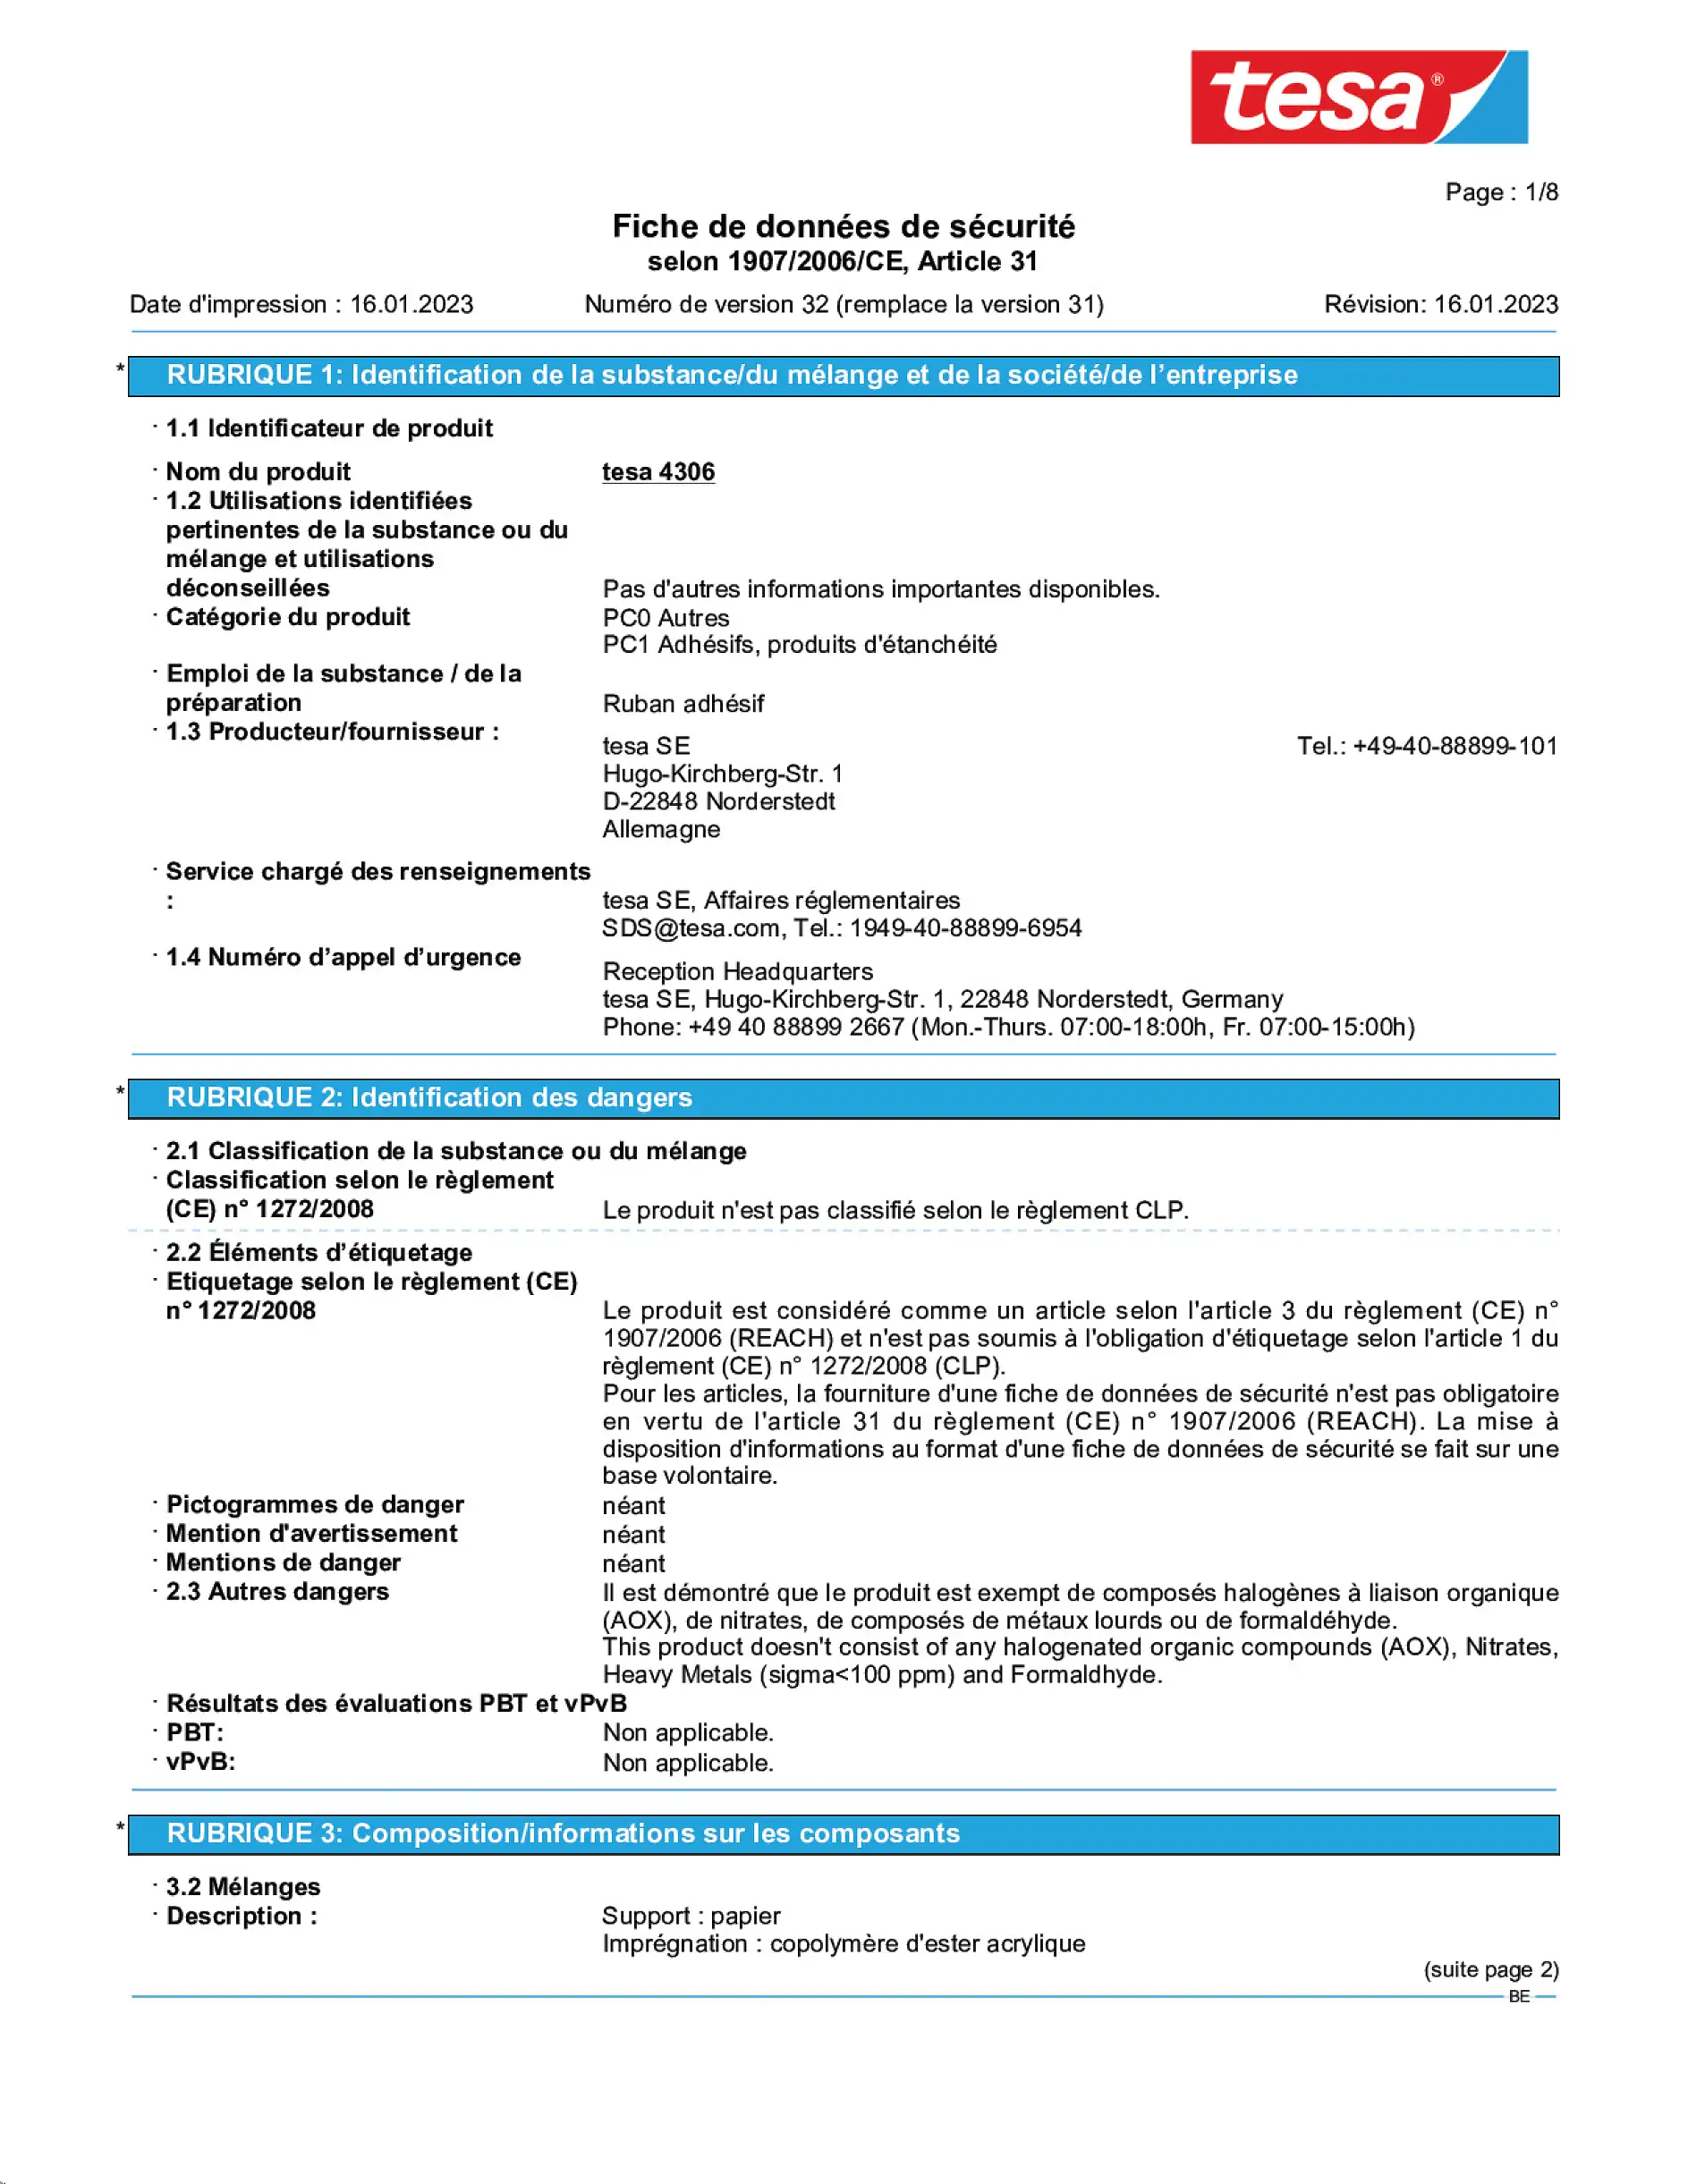 Safety data sheet_tesa® Professional 04306_nl-BE_v32